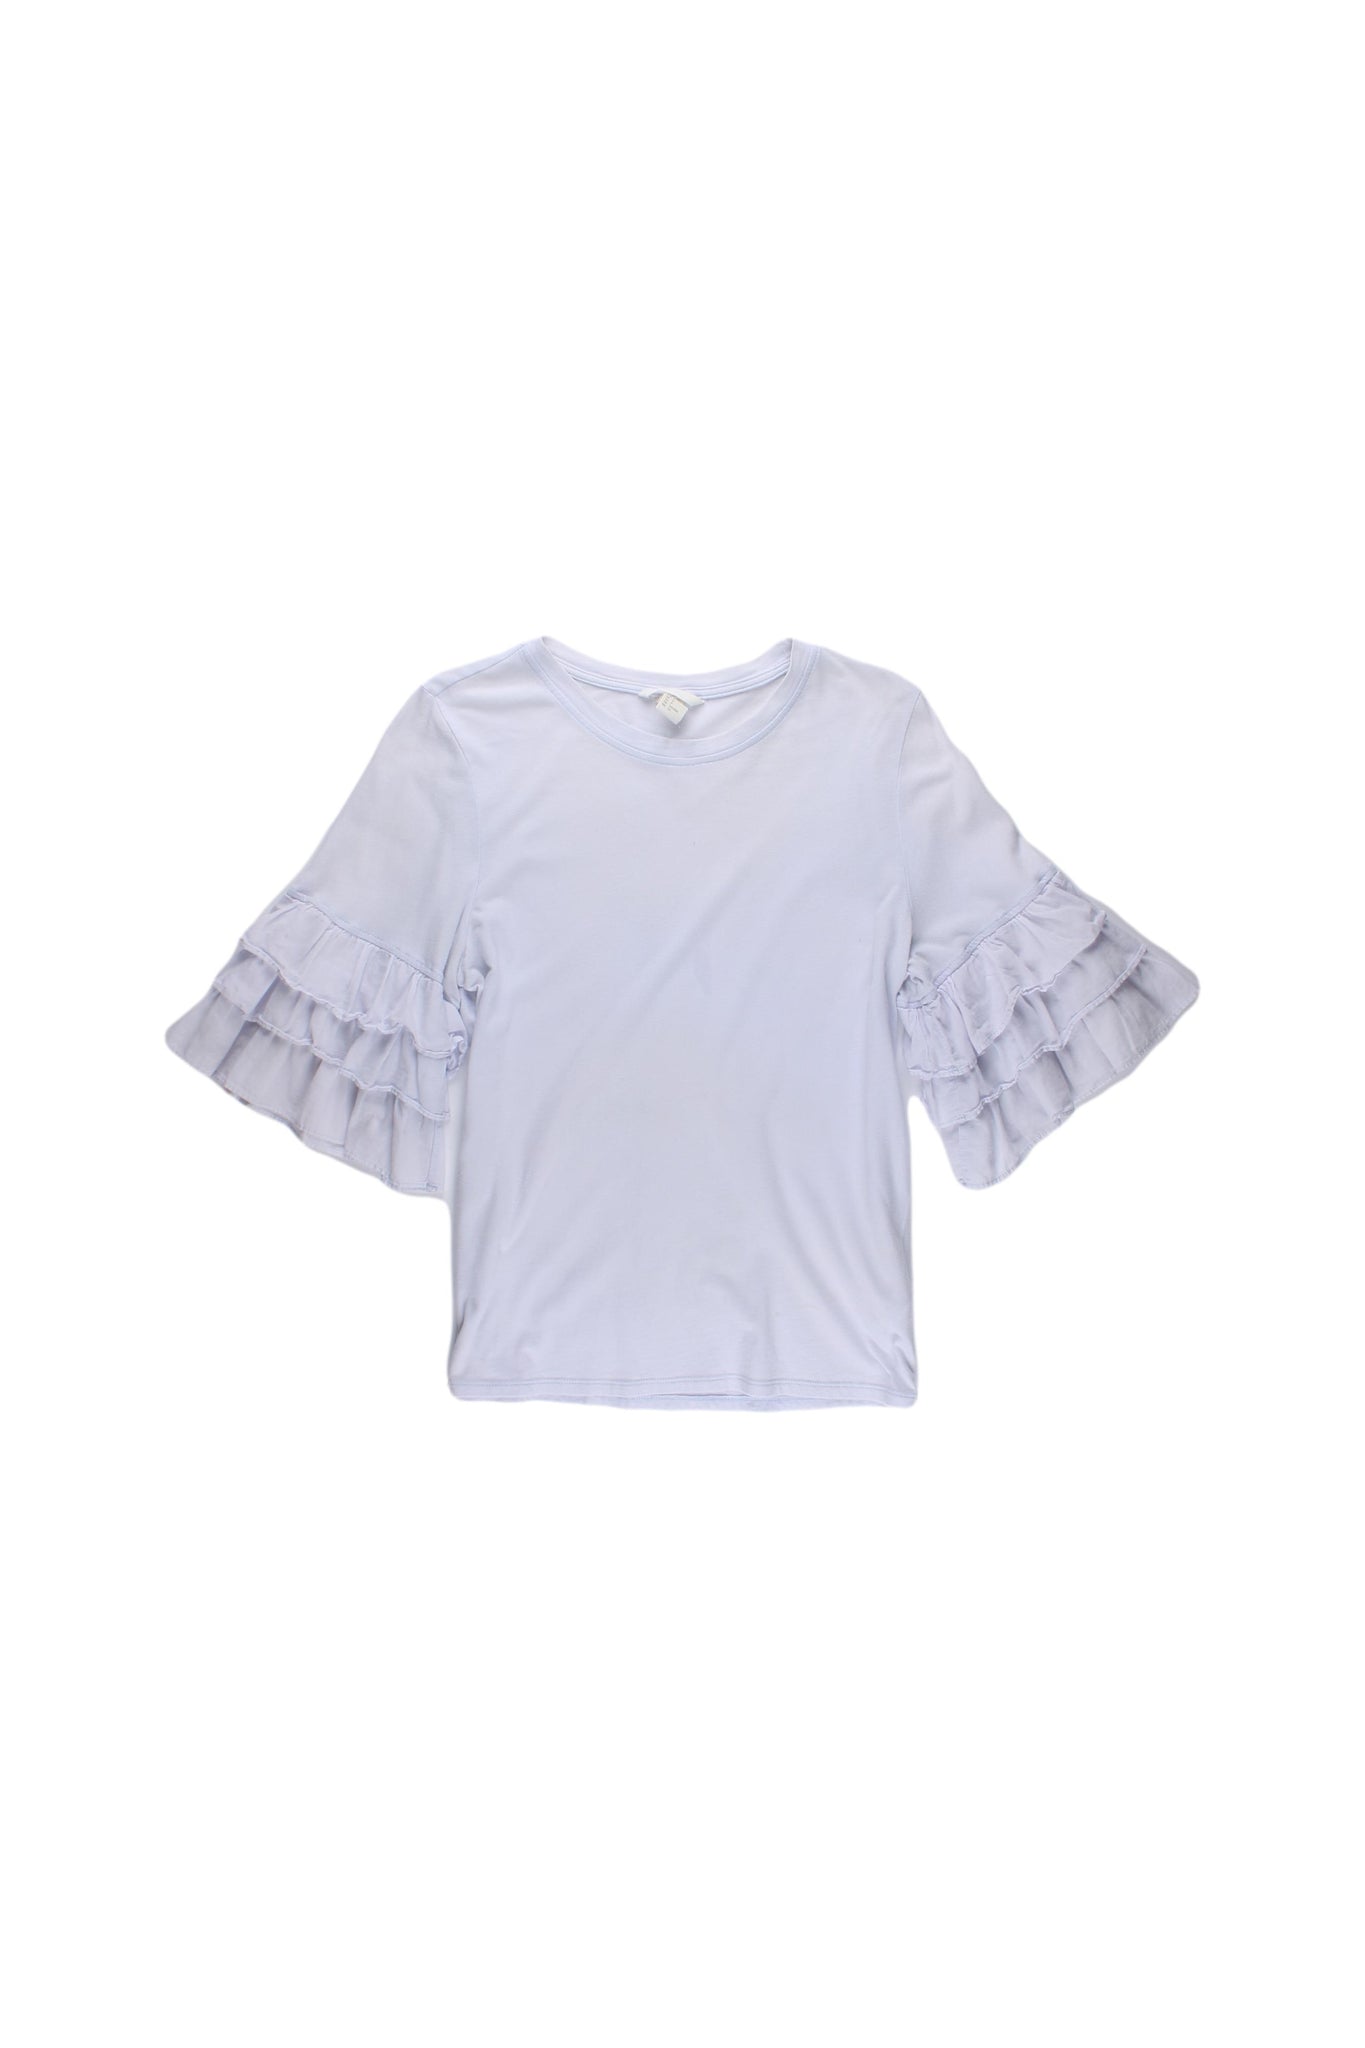 H&M - Camisa Blanca Con Mangas De Olanes